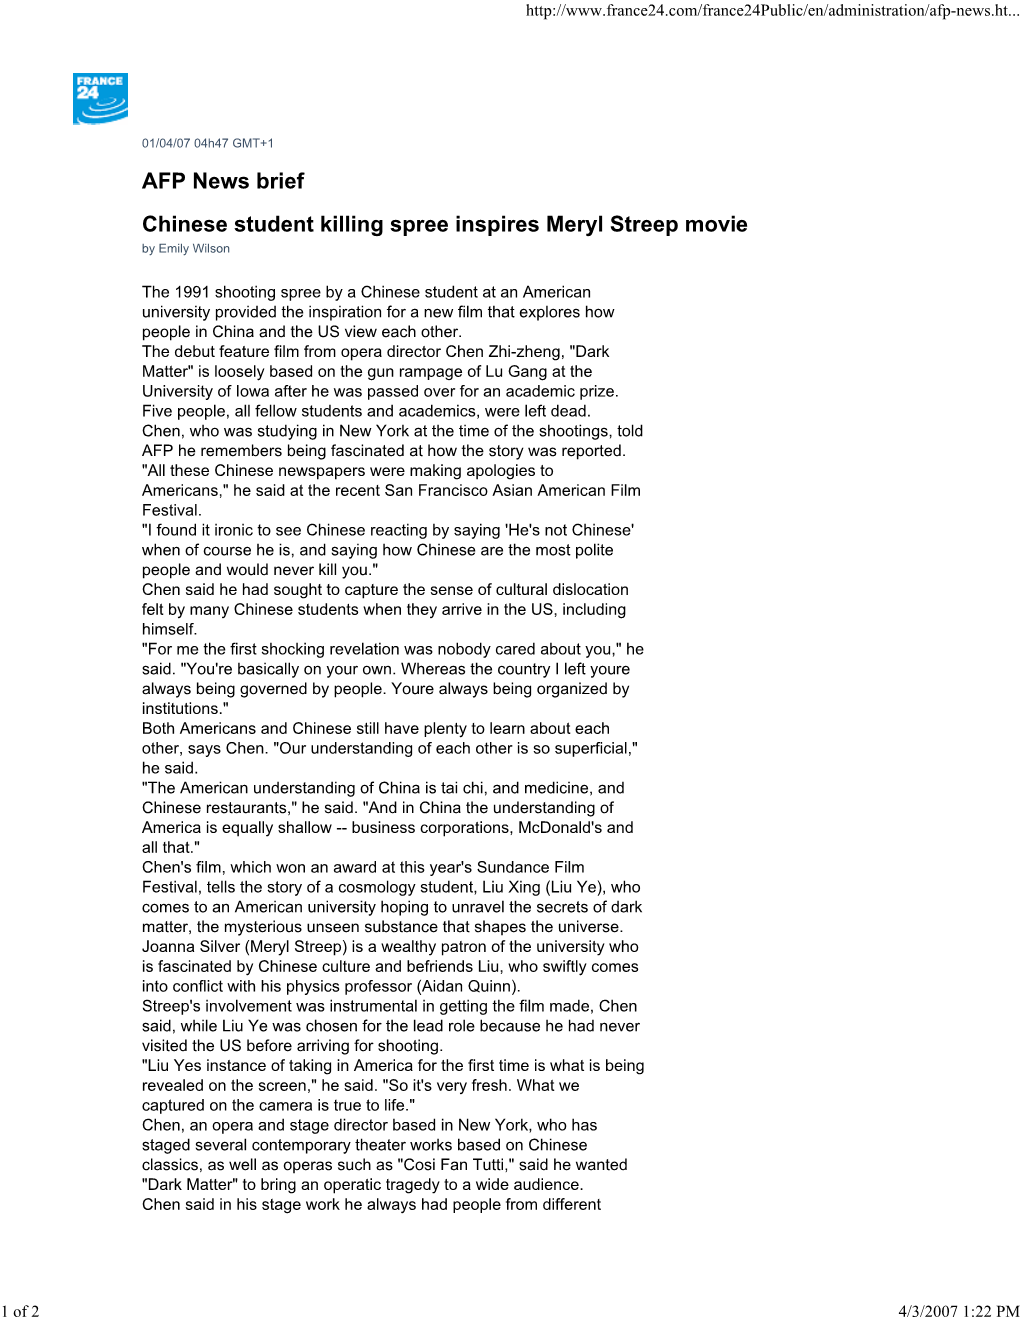 AFP News Brief Chinese Student Killing Spree Inspires Meryl Streep Movie by Emily Wilson